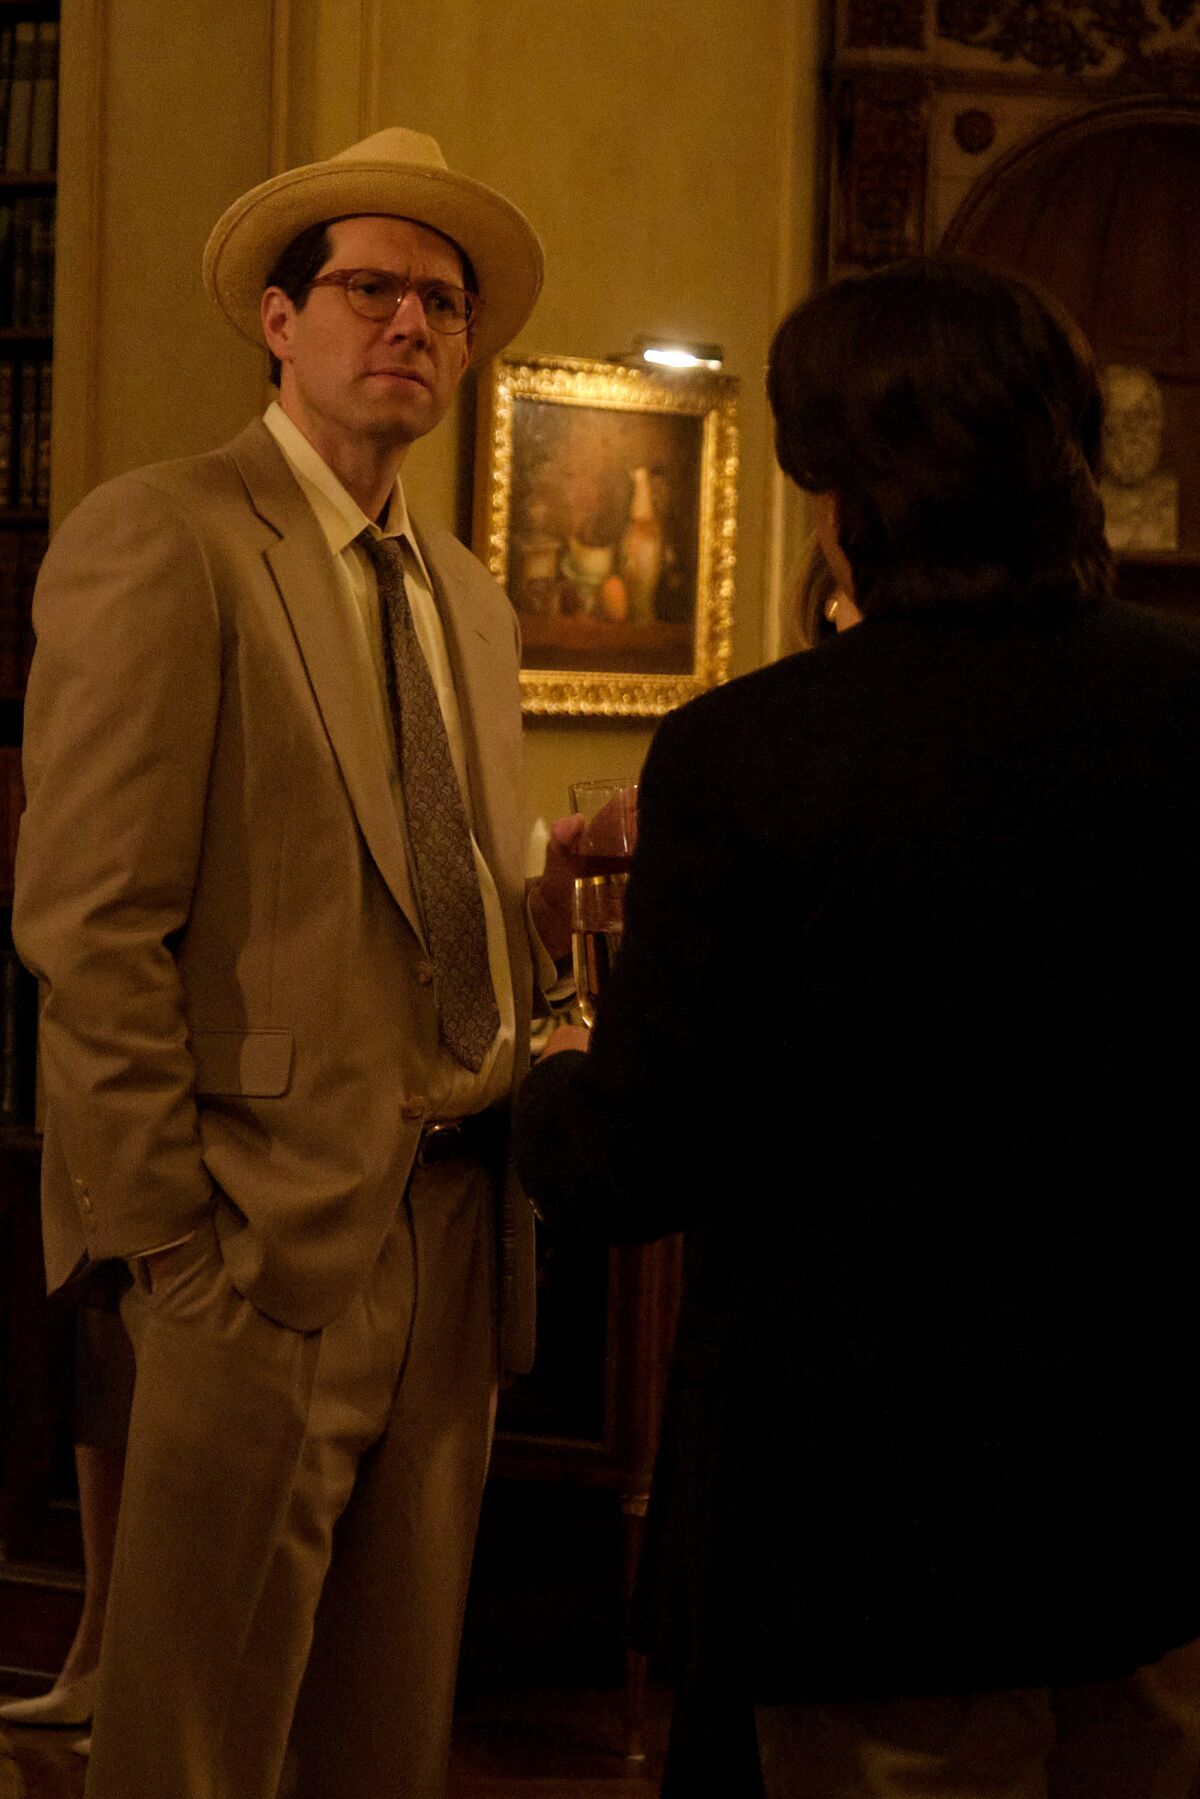 Billy Eichner as the online journalist Matt Drudge, wearing a beige suit and panama hat.